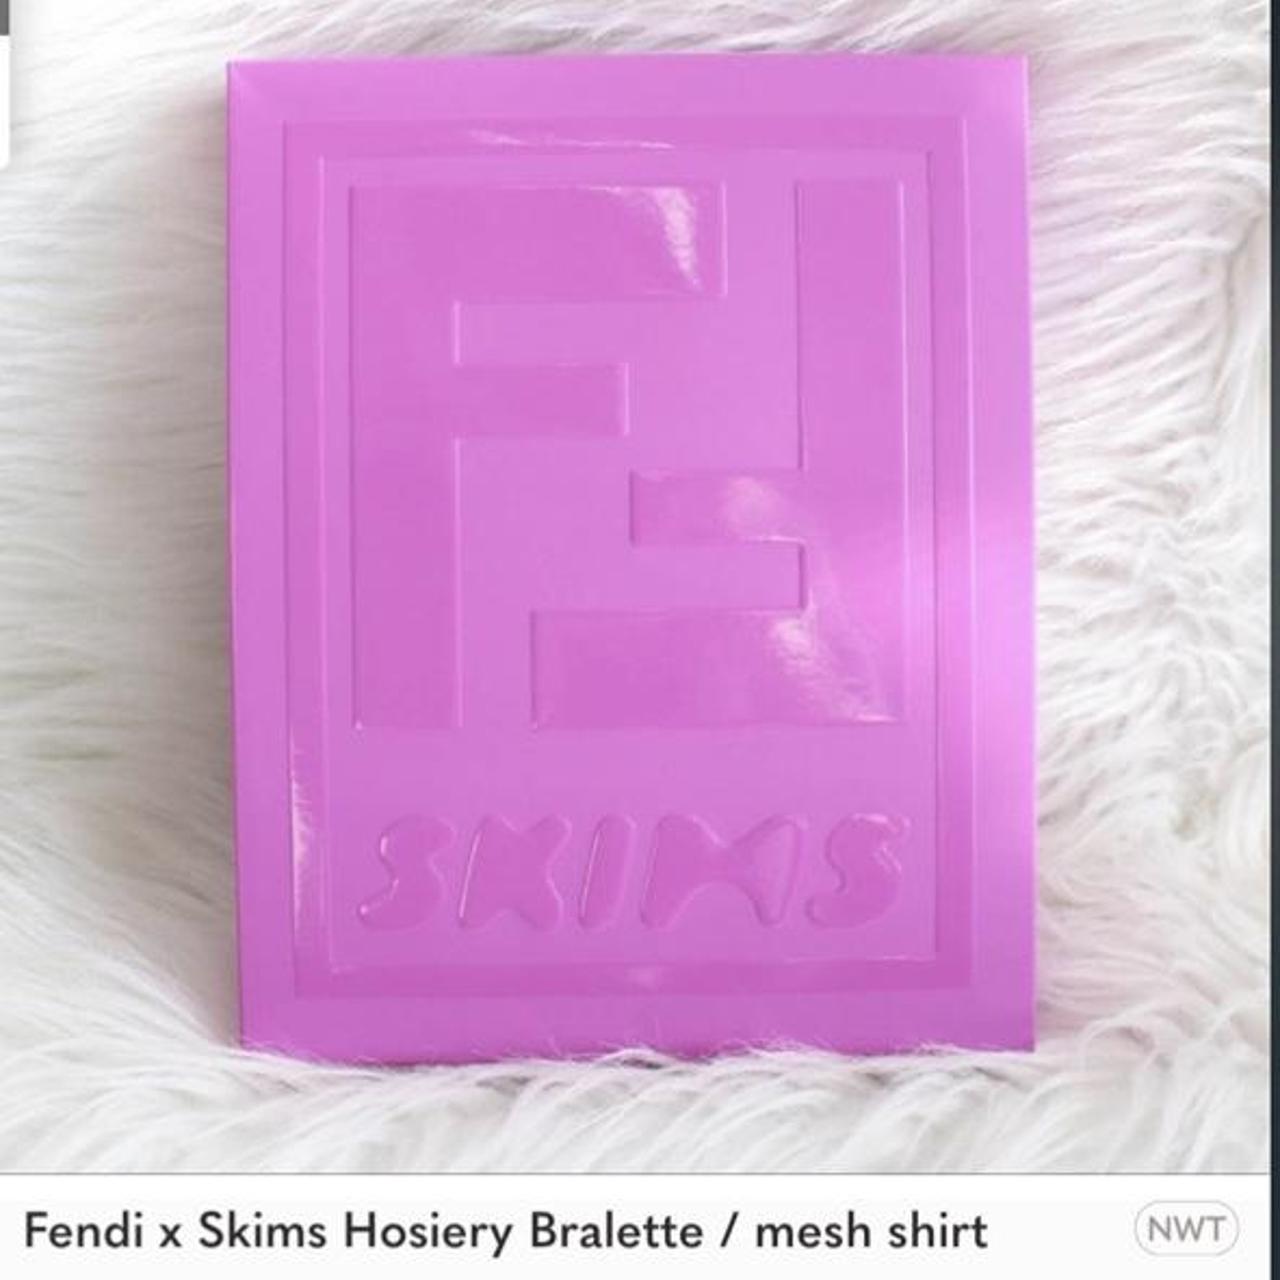 Fendi x Skims Hosiery Bra/ mesh shirt like new. - Depop